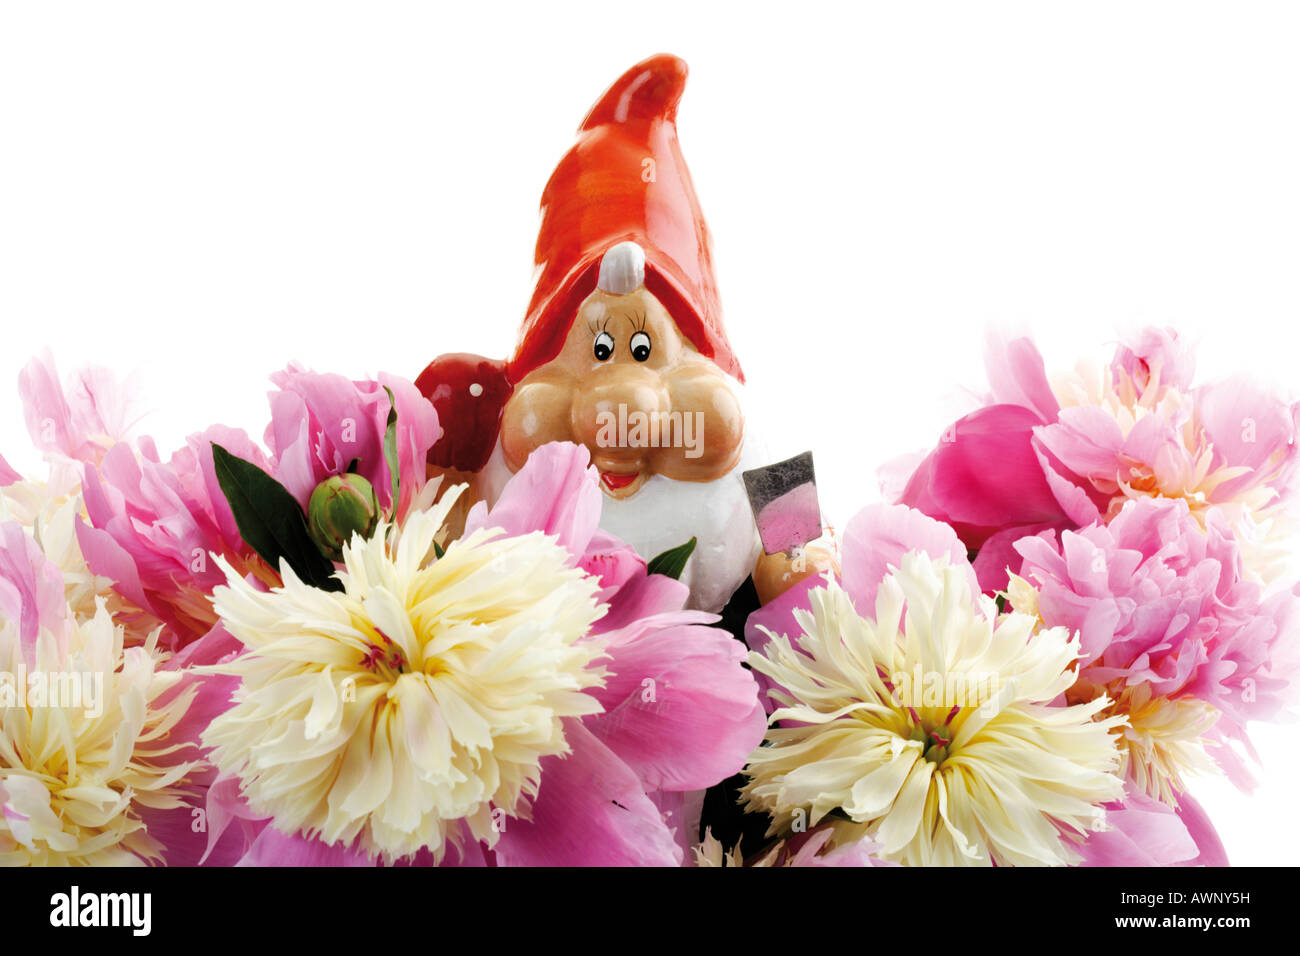 Garden gnome with peonies Stock Photo